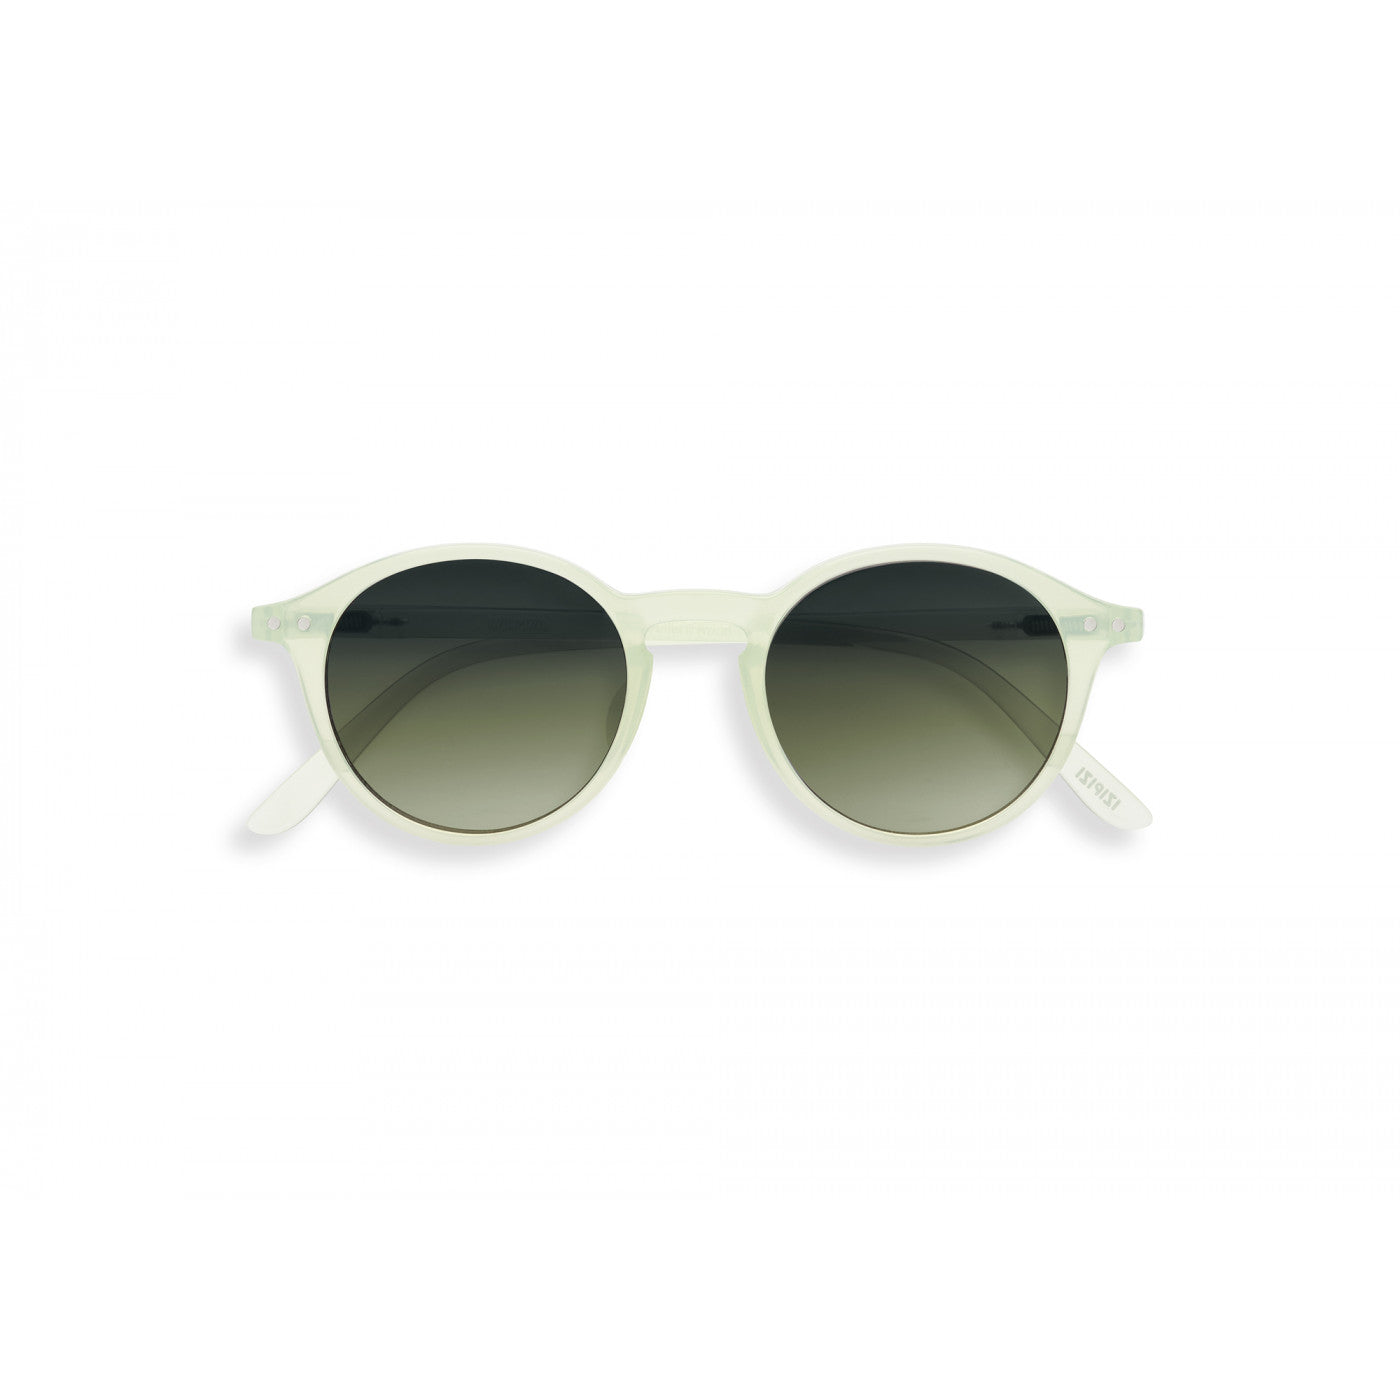 Junior Sunglasses  - #D Quiet Green